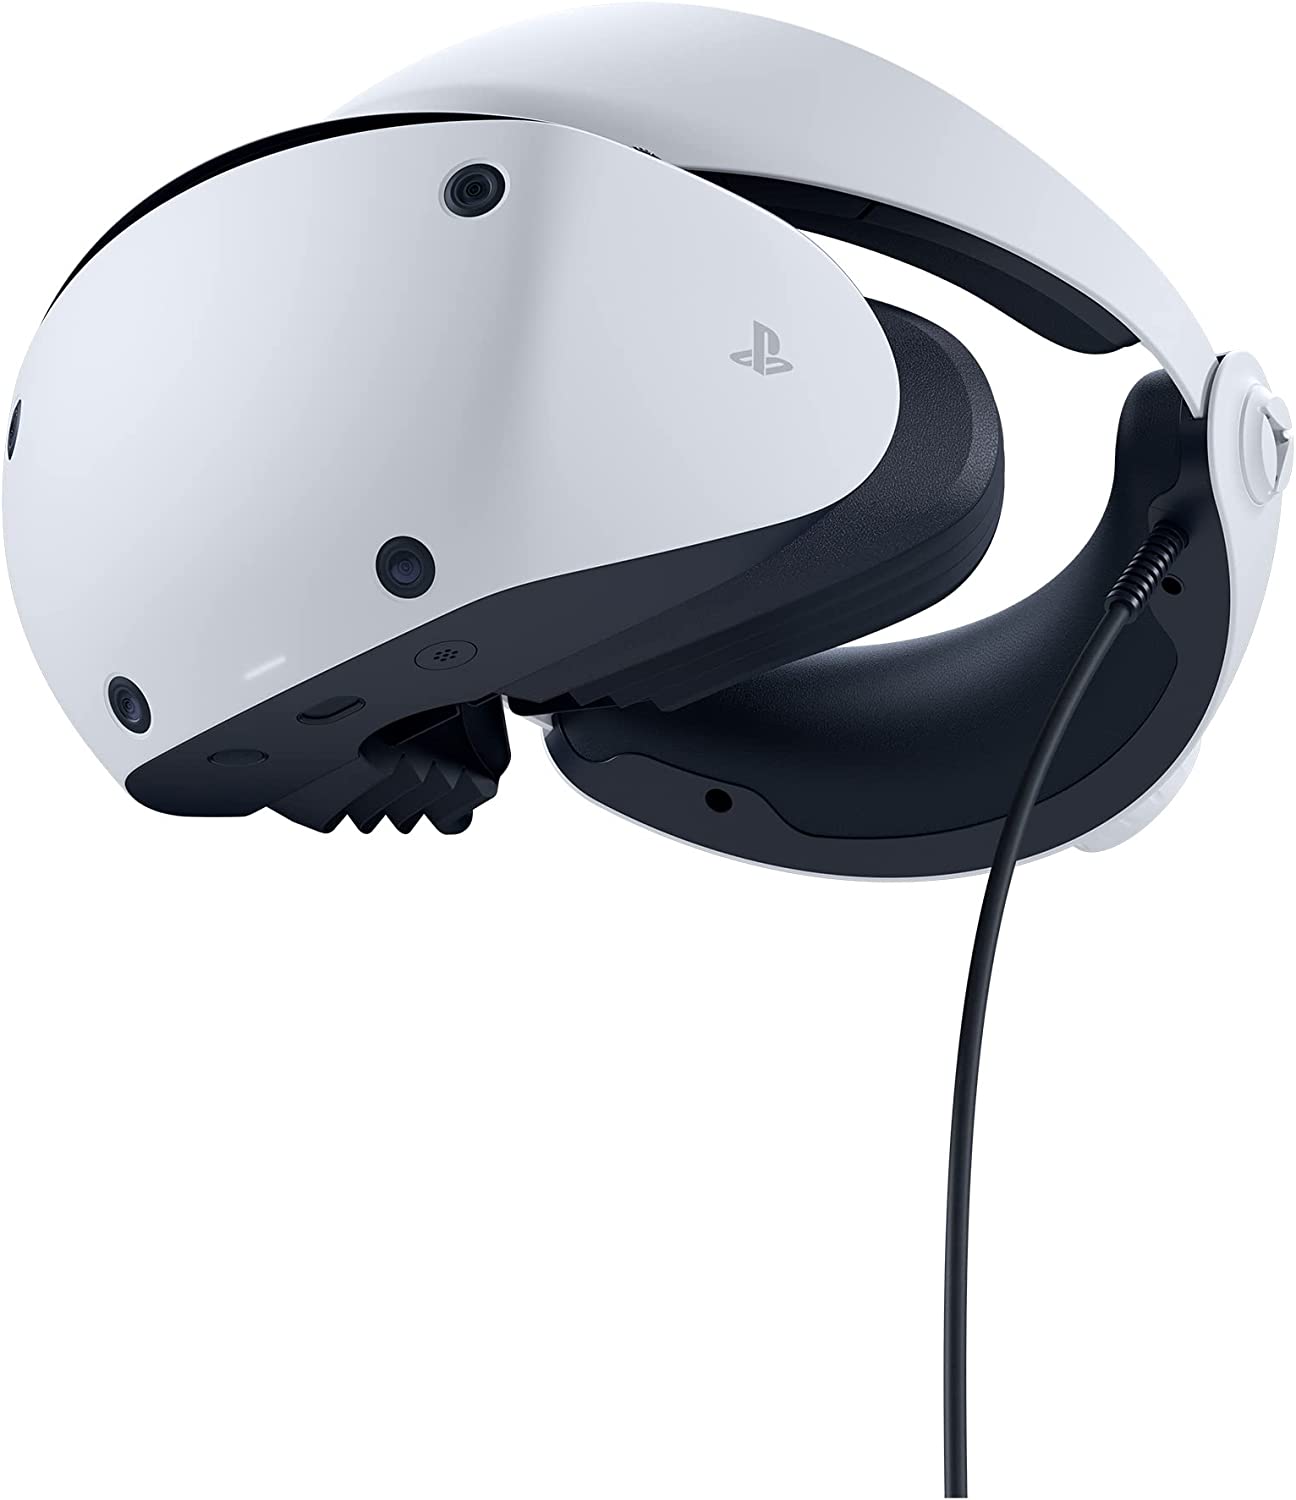 PlayStation VR2 - Standard Edition